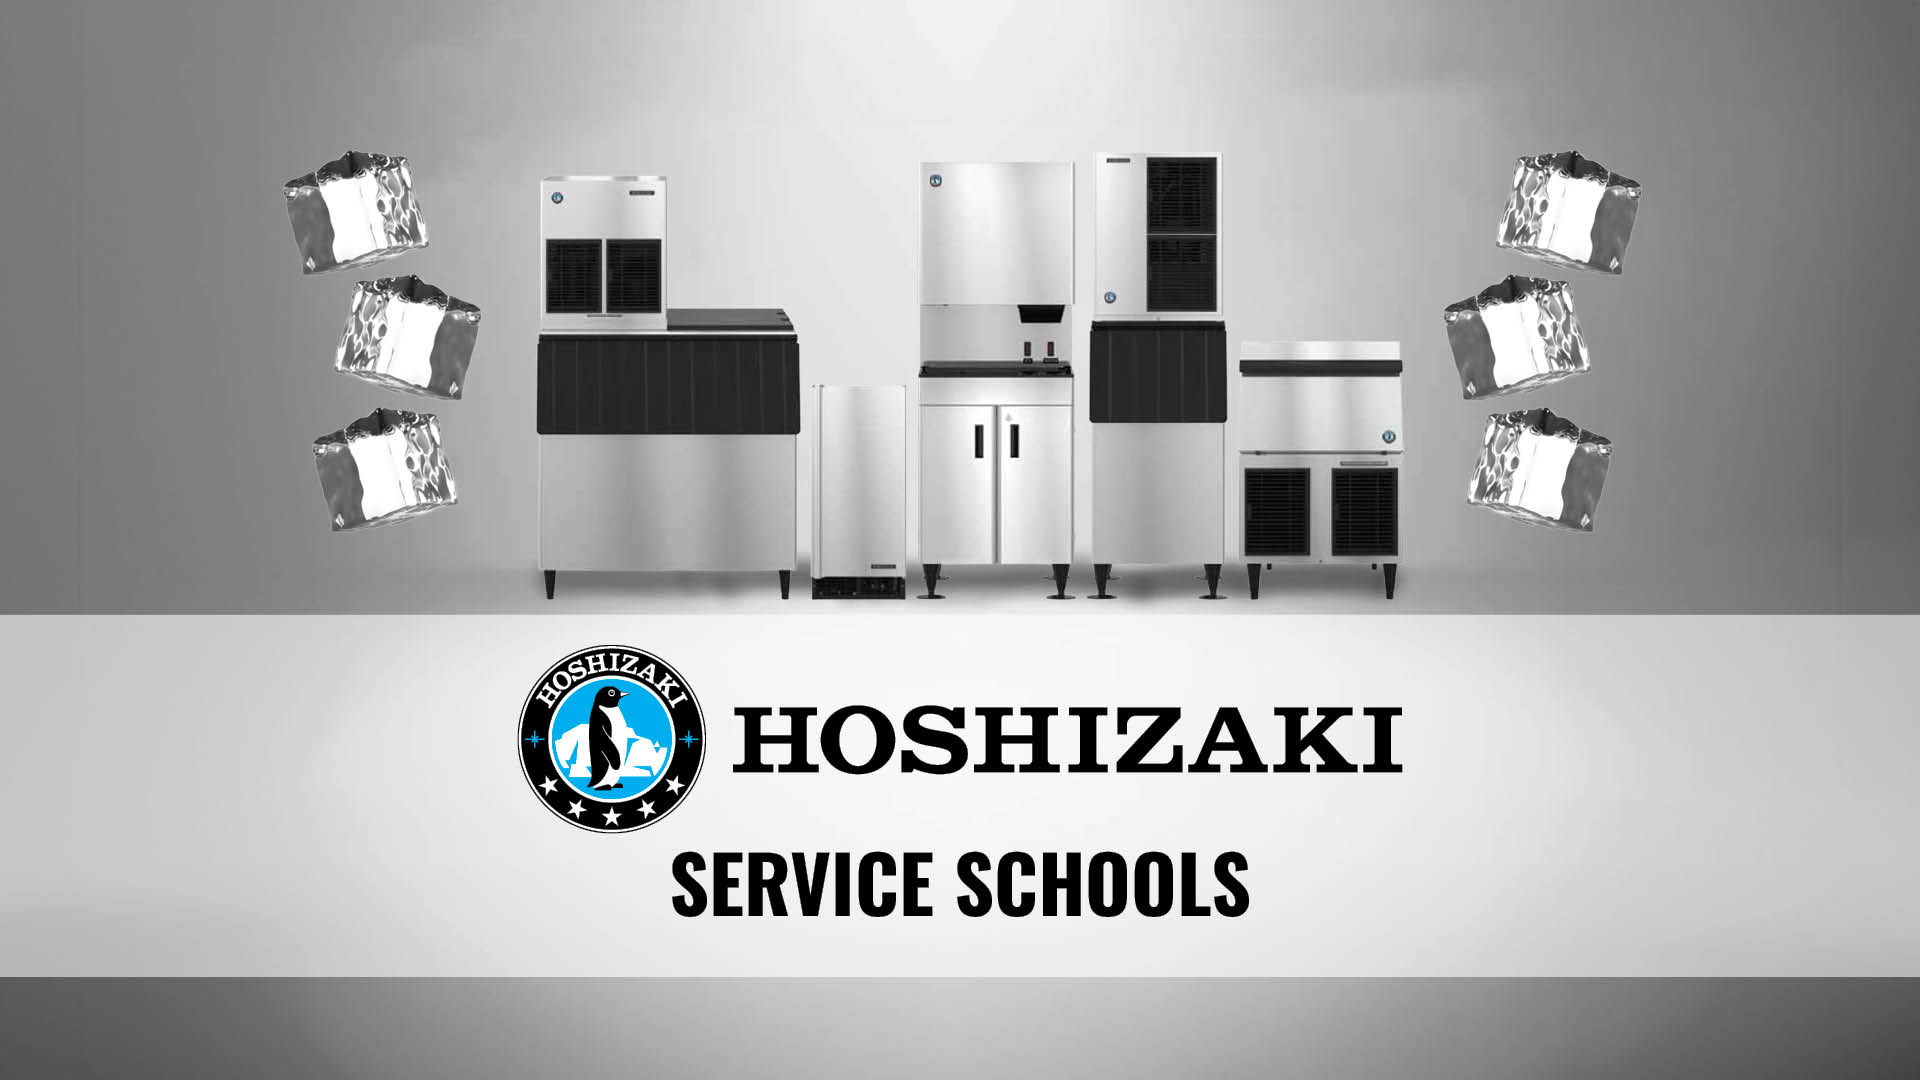 Hoshizaki Service Schools in Regina